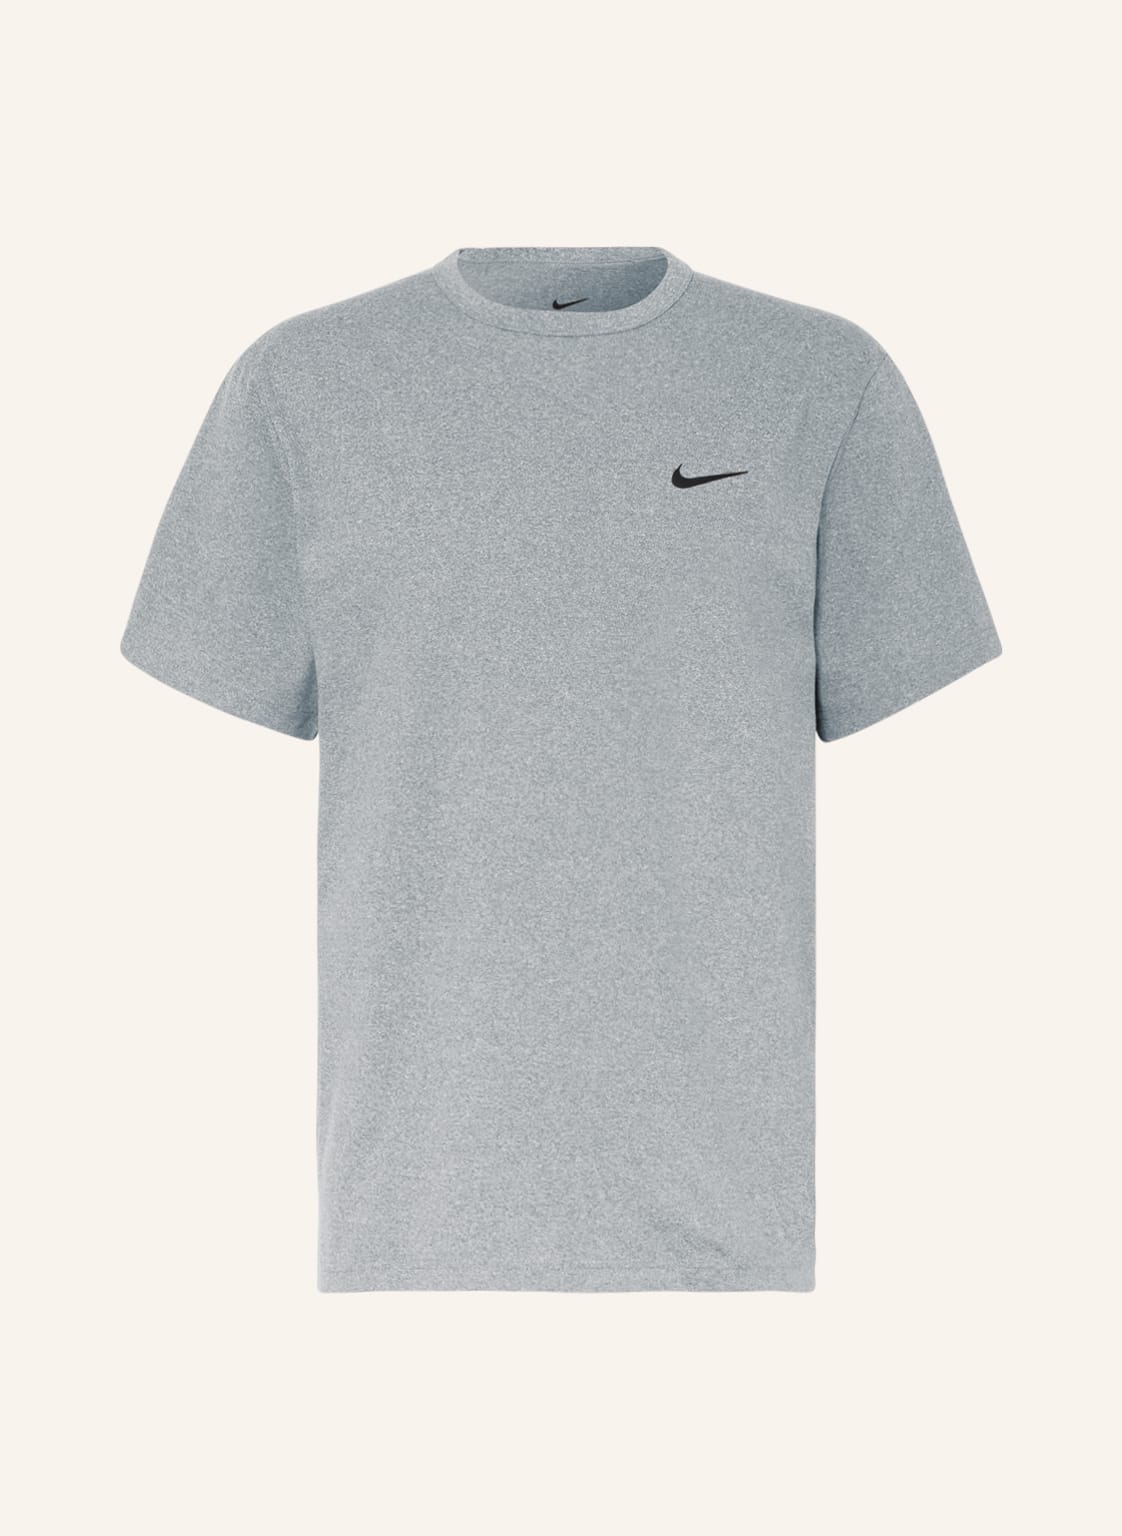 Nike T-Shirt Hyverse grau von Nike